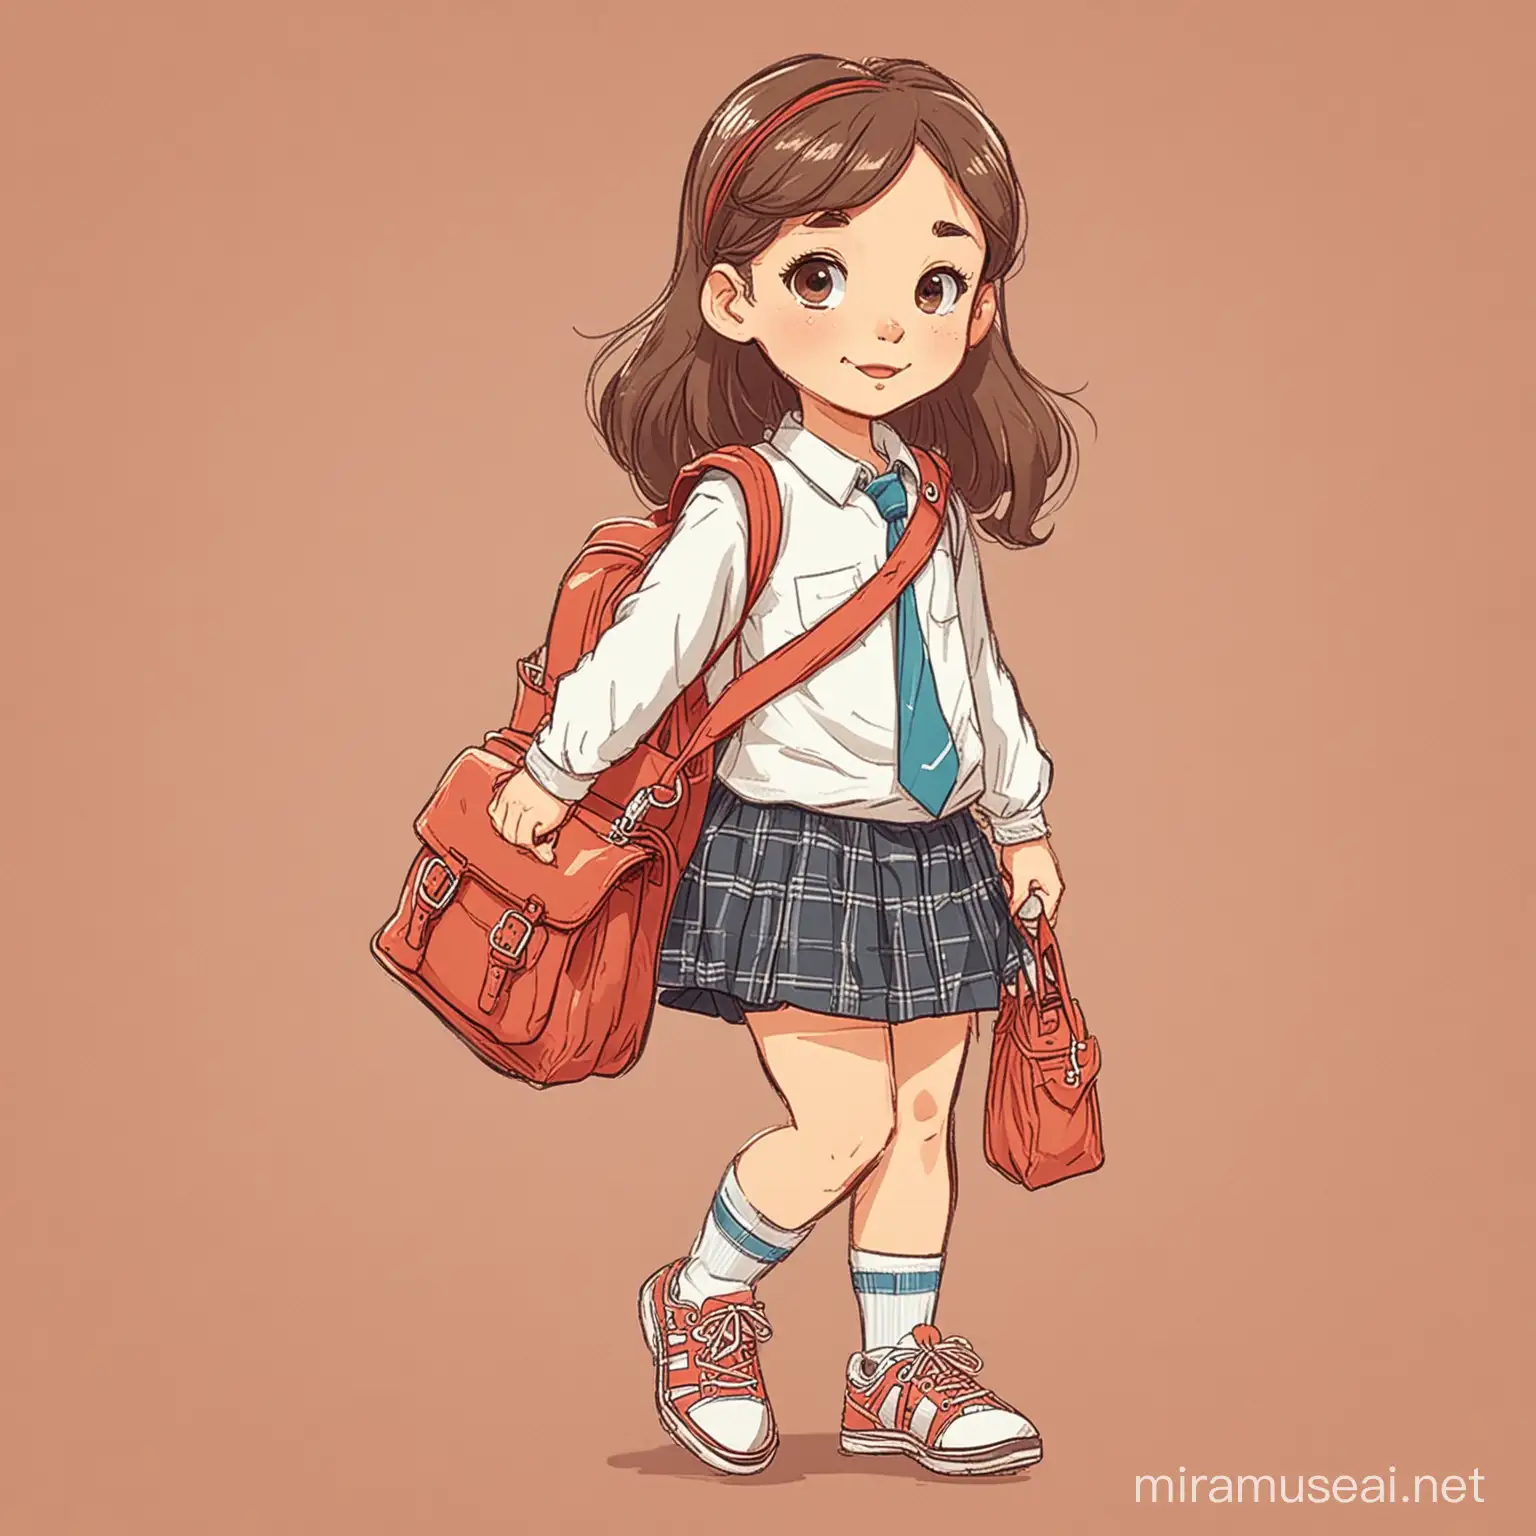 Cheerful SecondGrade Girl with Schoolbag in Cartoon HandDrawn Style